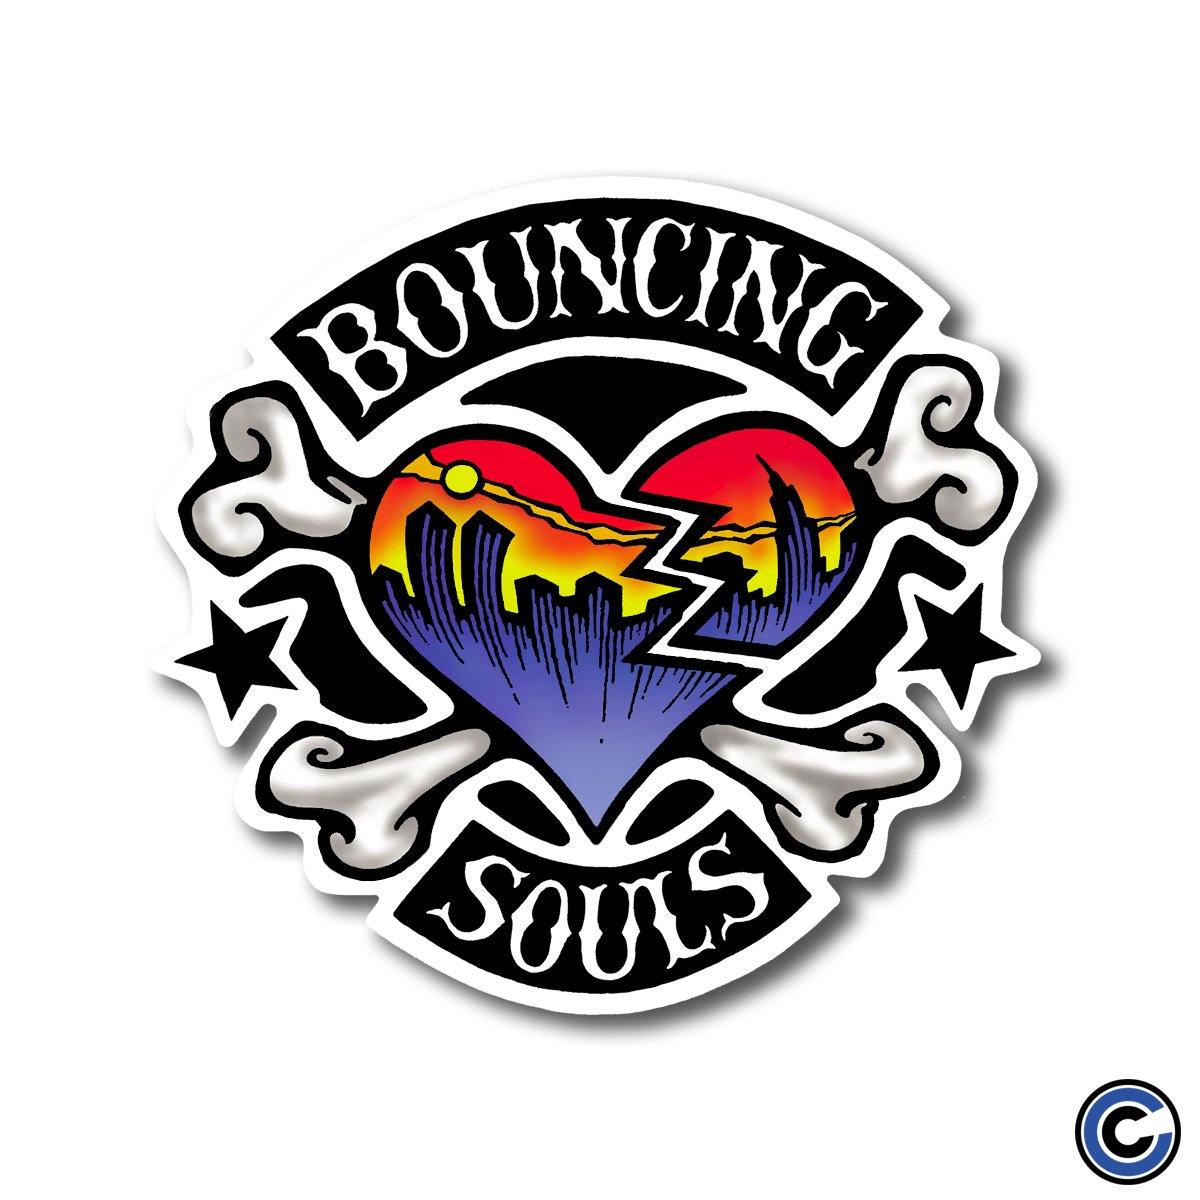 Buy – The Bouncing Souls "Rocker Heart Color" Sticker – Band & Music Merch – Cold Cuts Merch